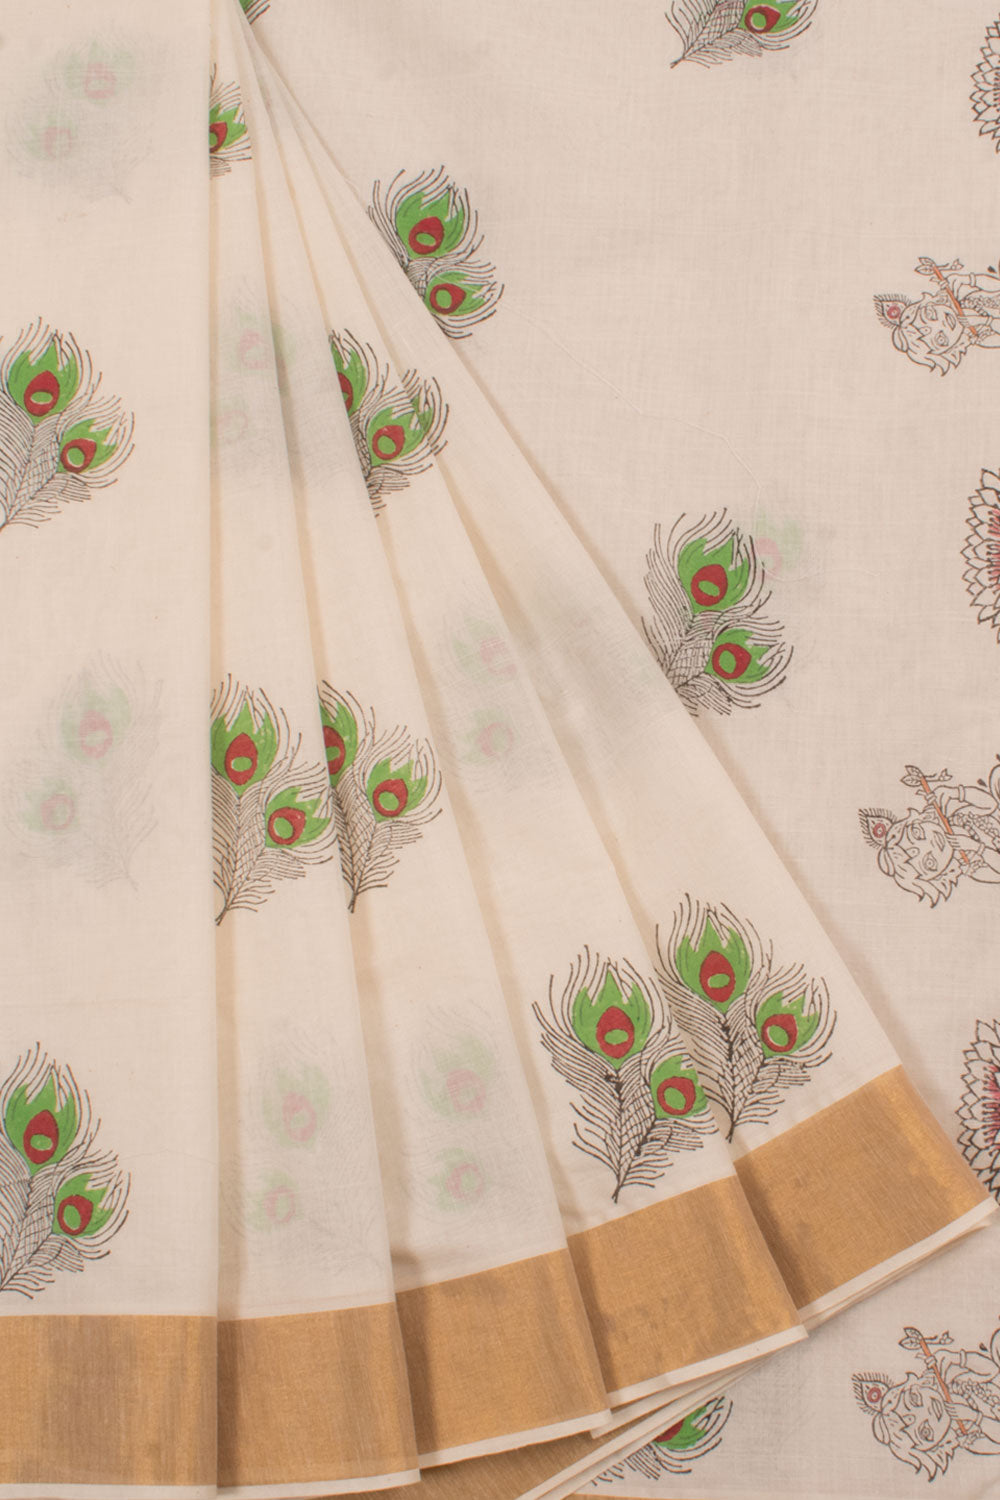 Hand Block Printed Kerala Cotton Saree with Peacock Feather, Little Krishna Motifs and Zari Border